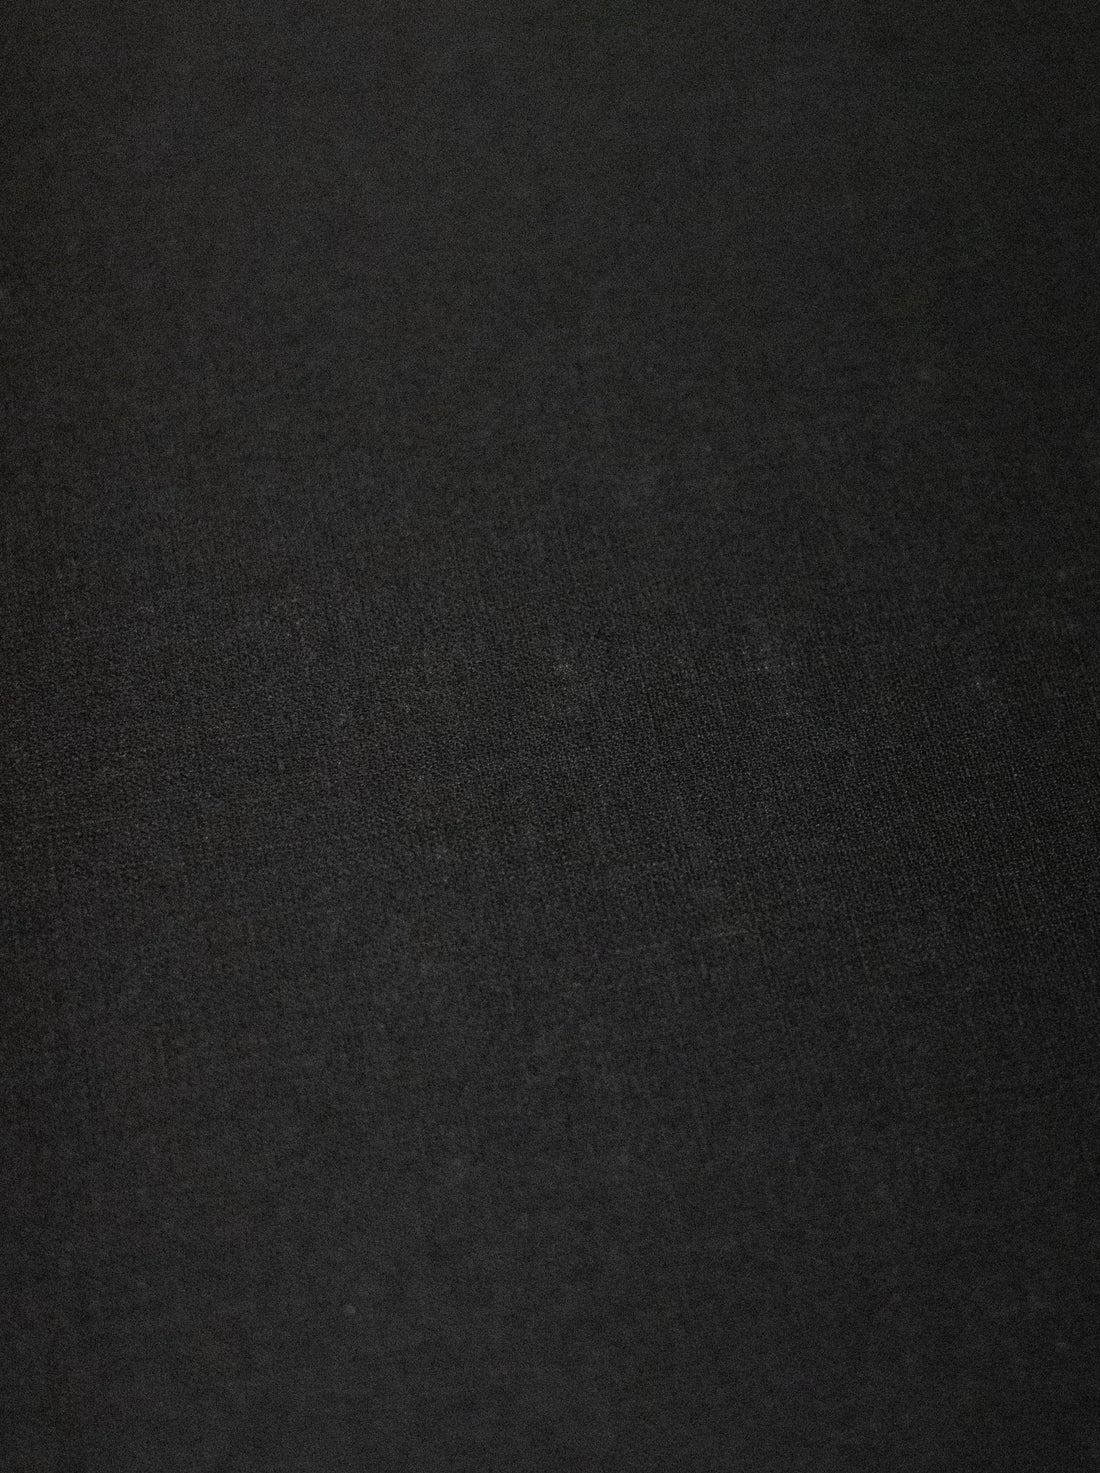 Double Sided Rollable Styling Surface  / Linen (Black) x Velvet (Ecru)